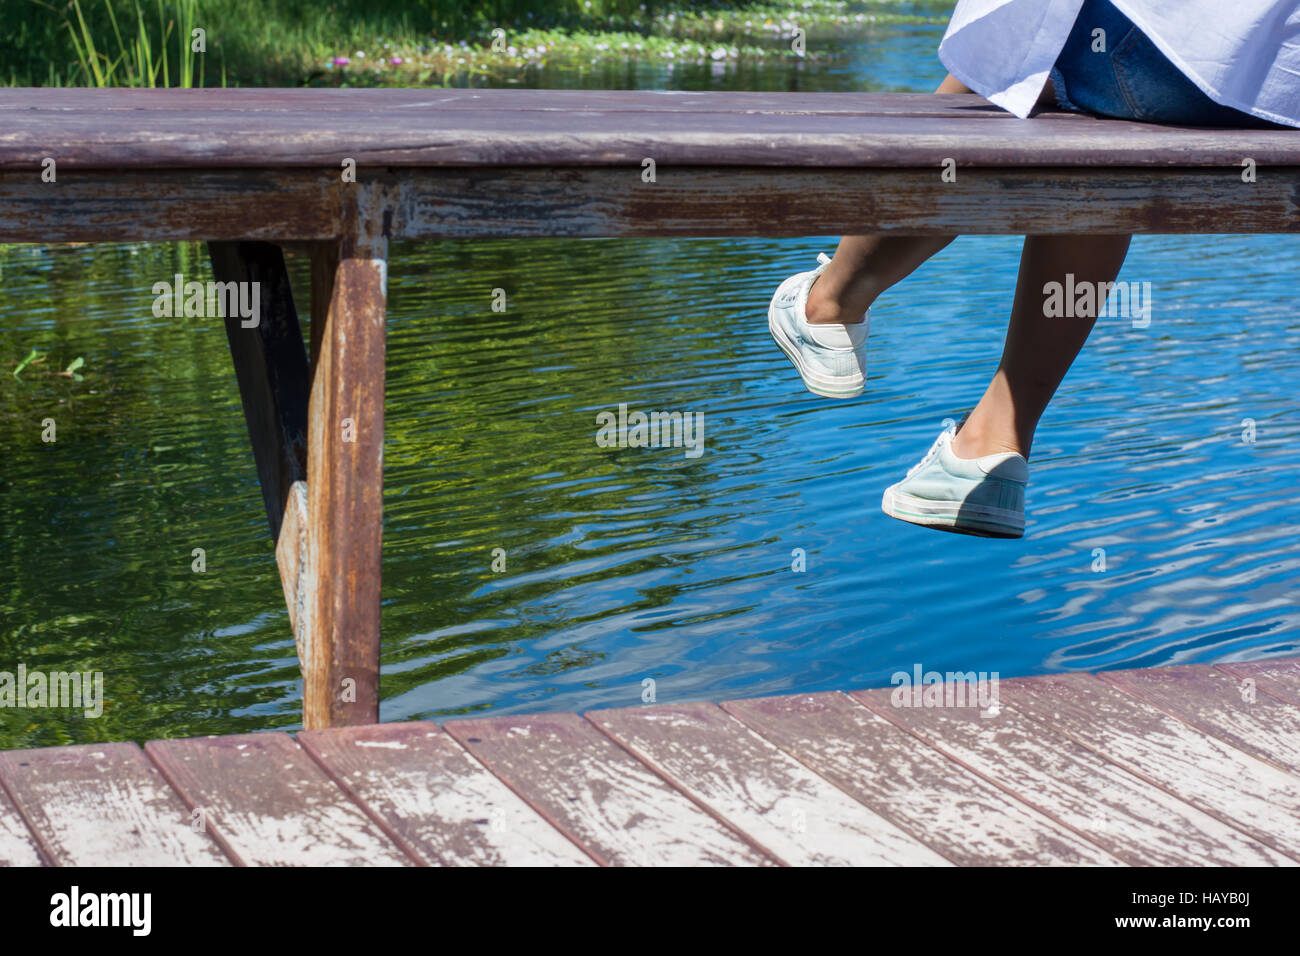 Frauenfüße über den Swimmingpool im Garten. Stockfoto